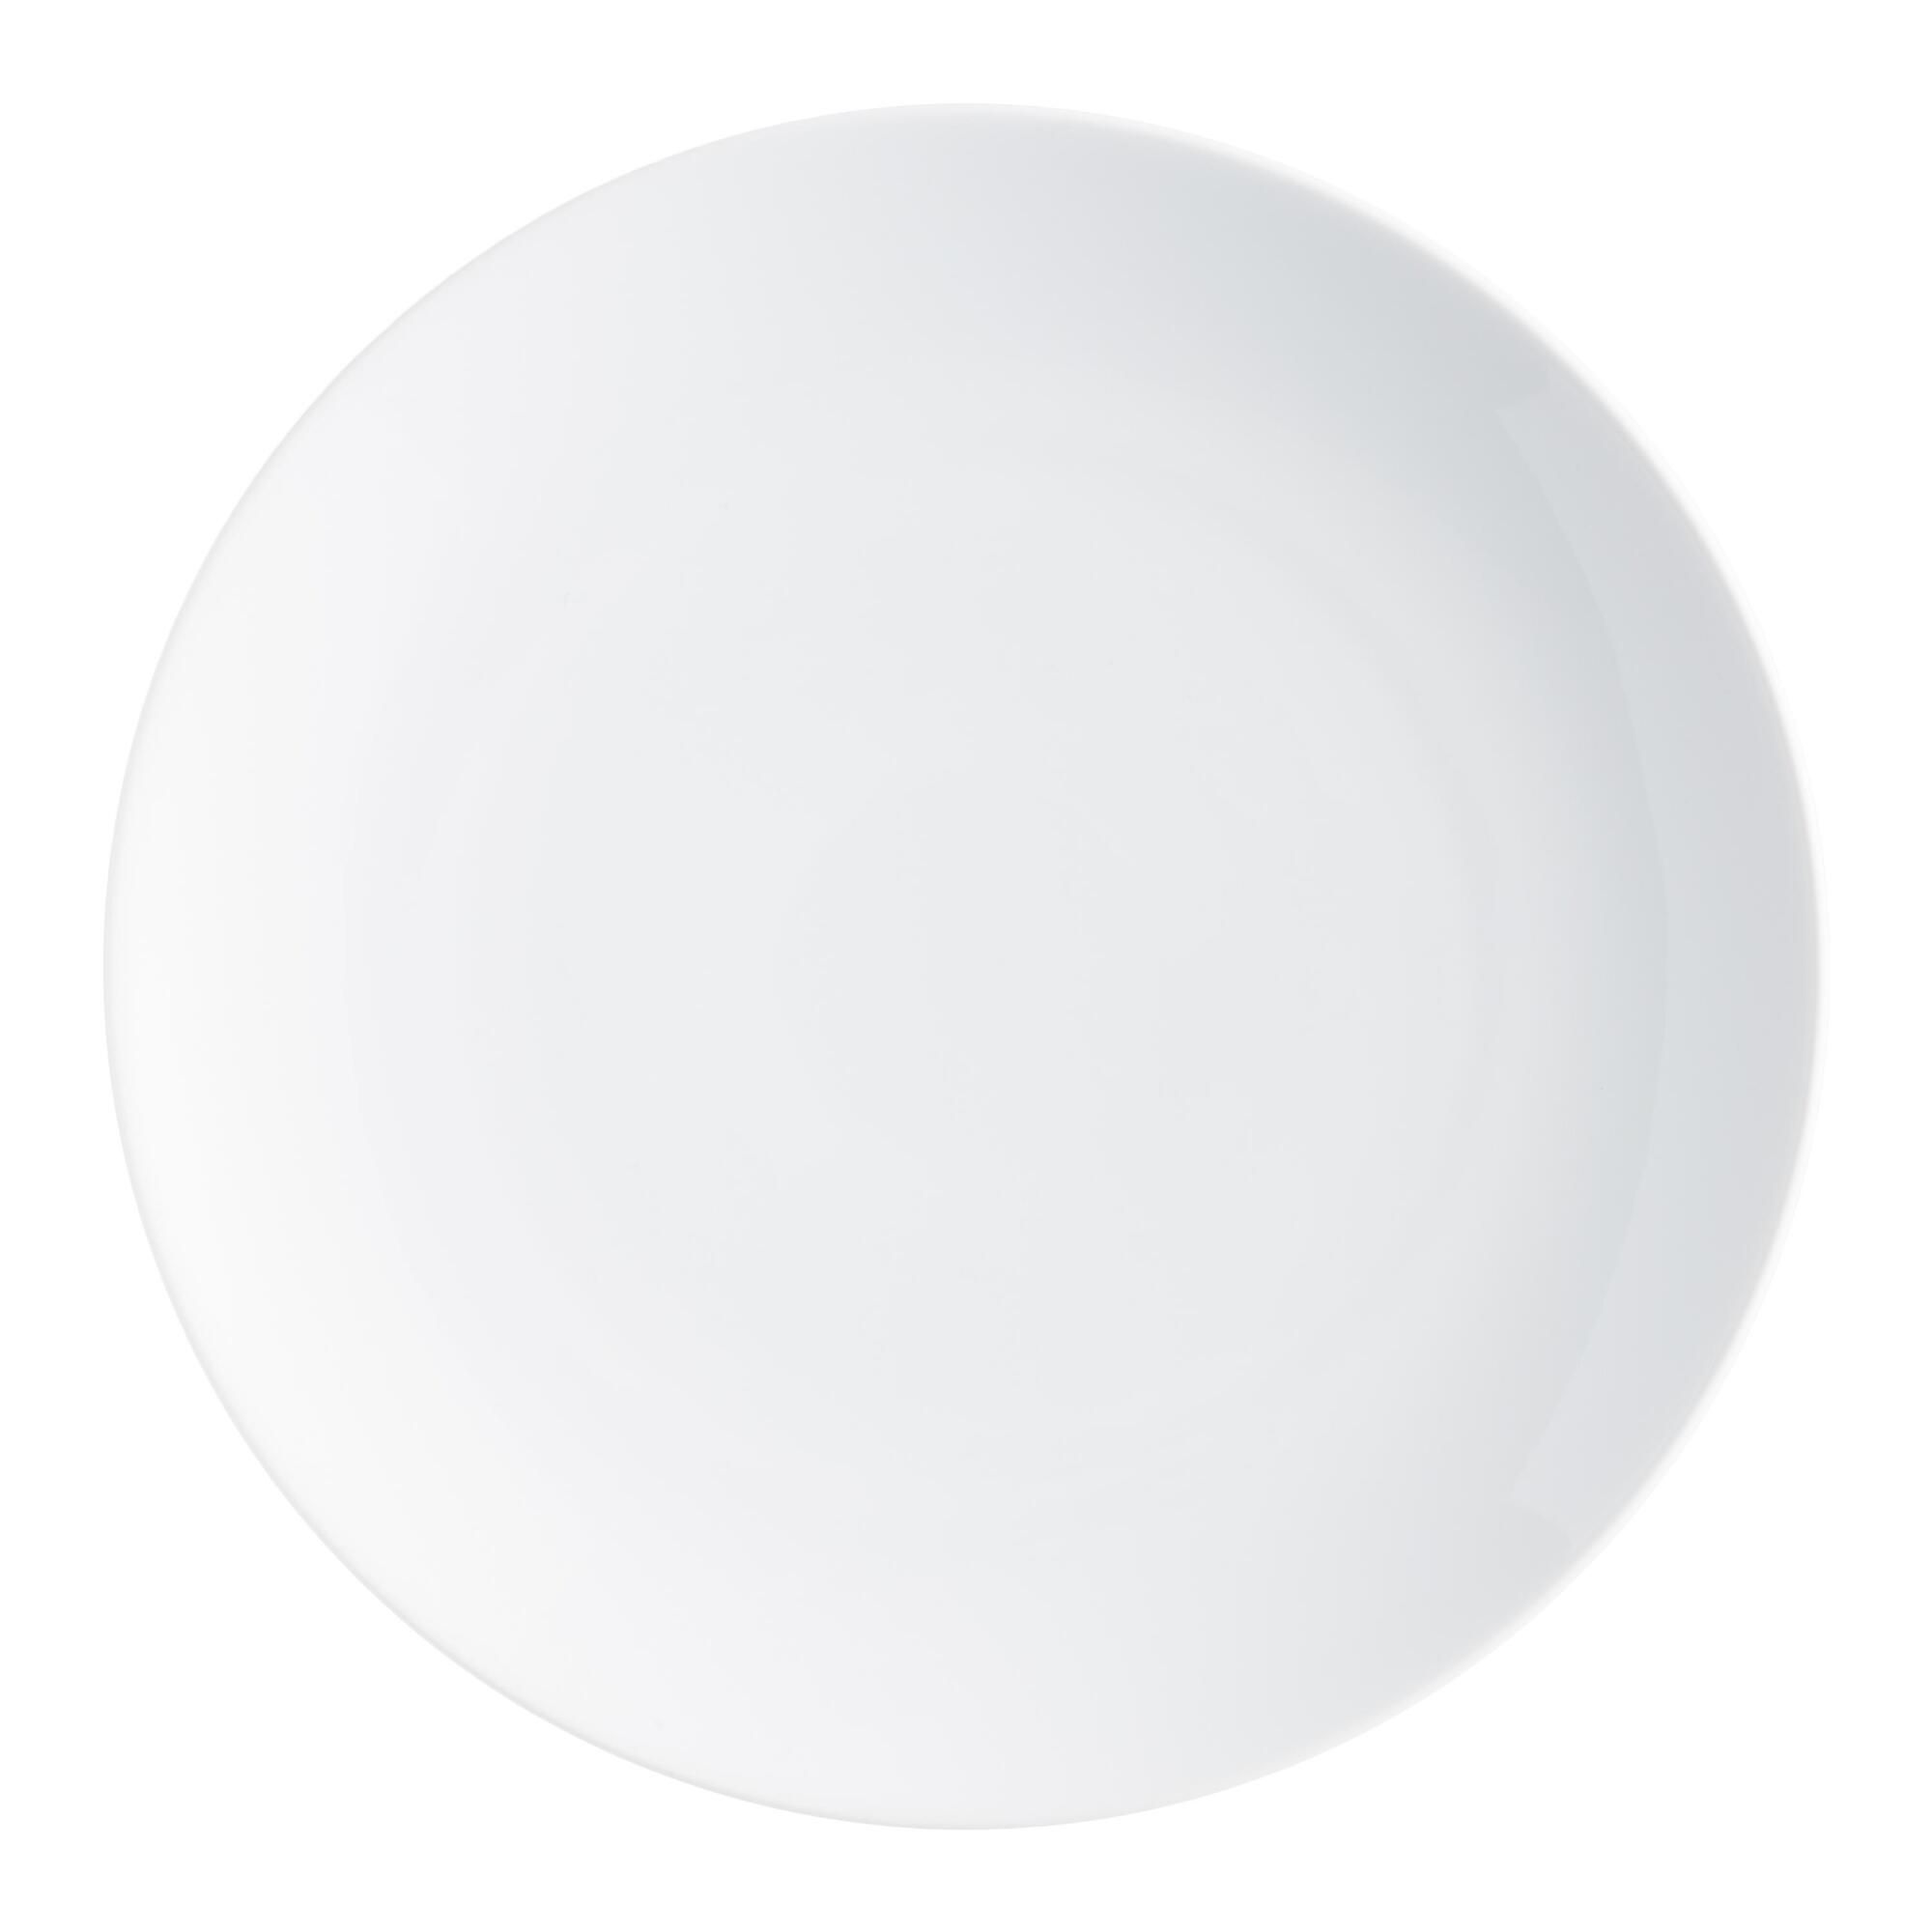 White Coupe Dinner Plates, set of 4 - Porcelain by World Market | World Market